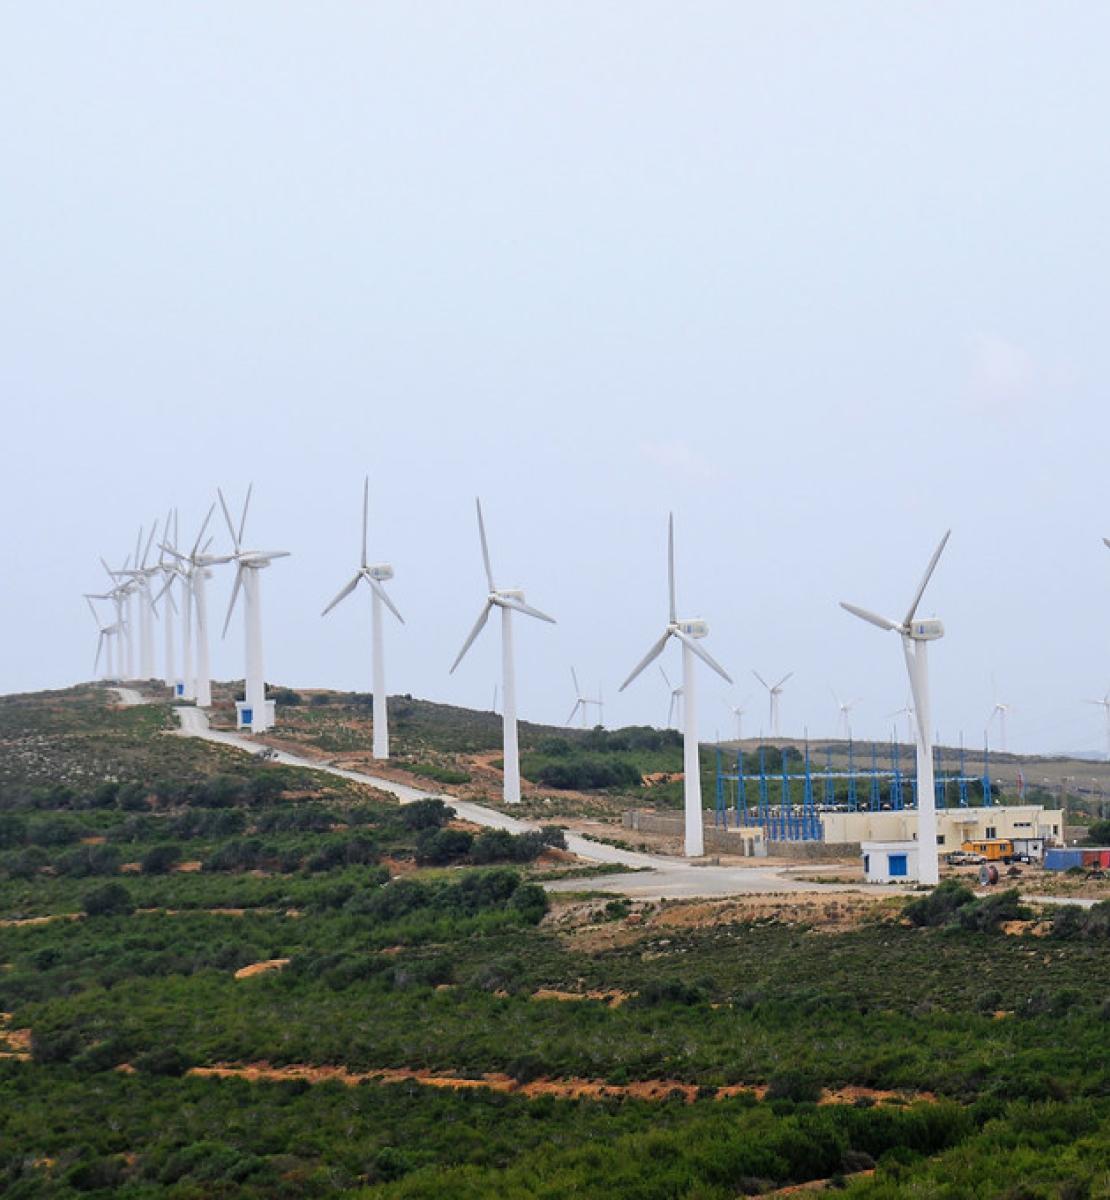 A wind turbine farm on a cloudy day. 